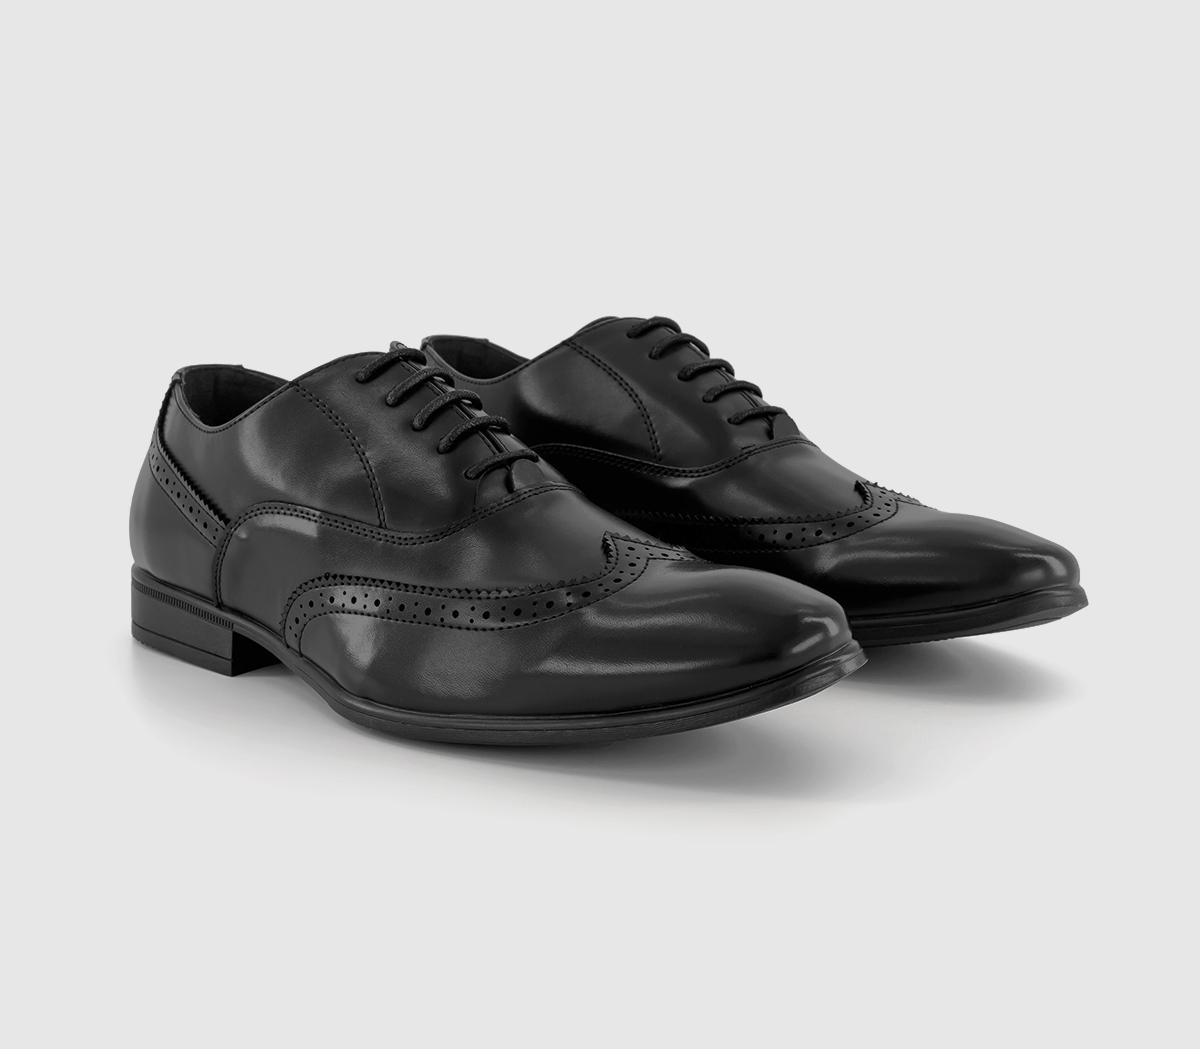 OFFICE Martel Wingtip Oxford Shoes Black - Men’s Smart Shoes